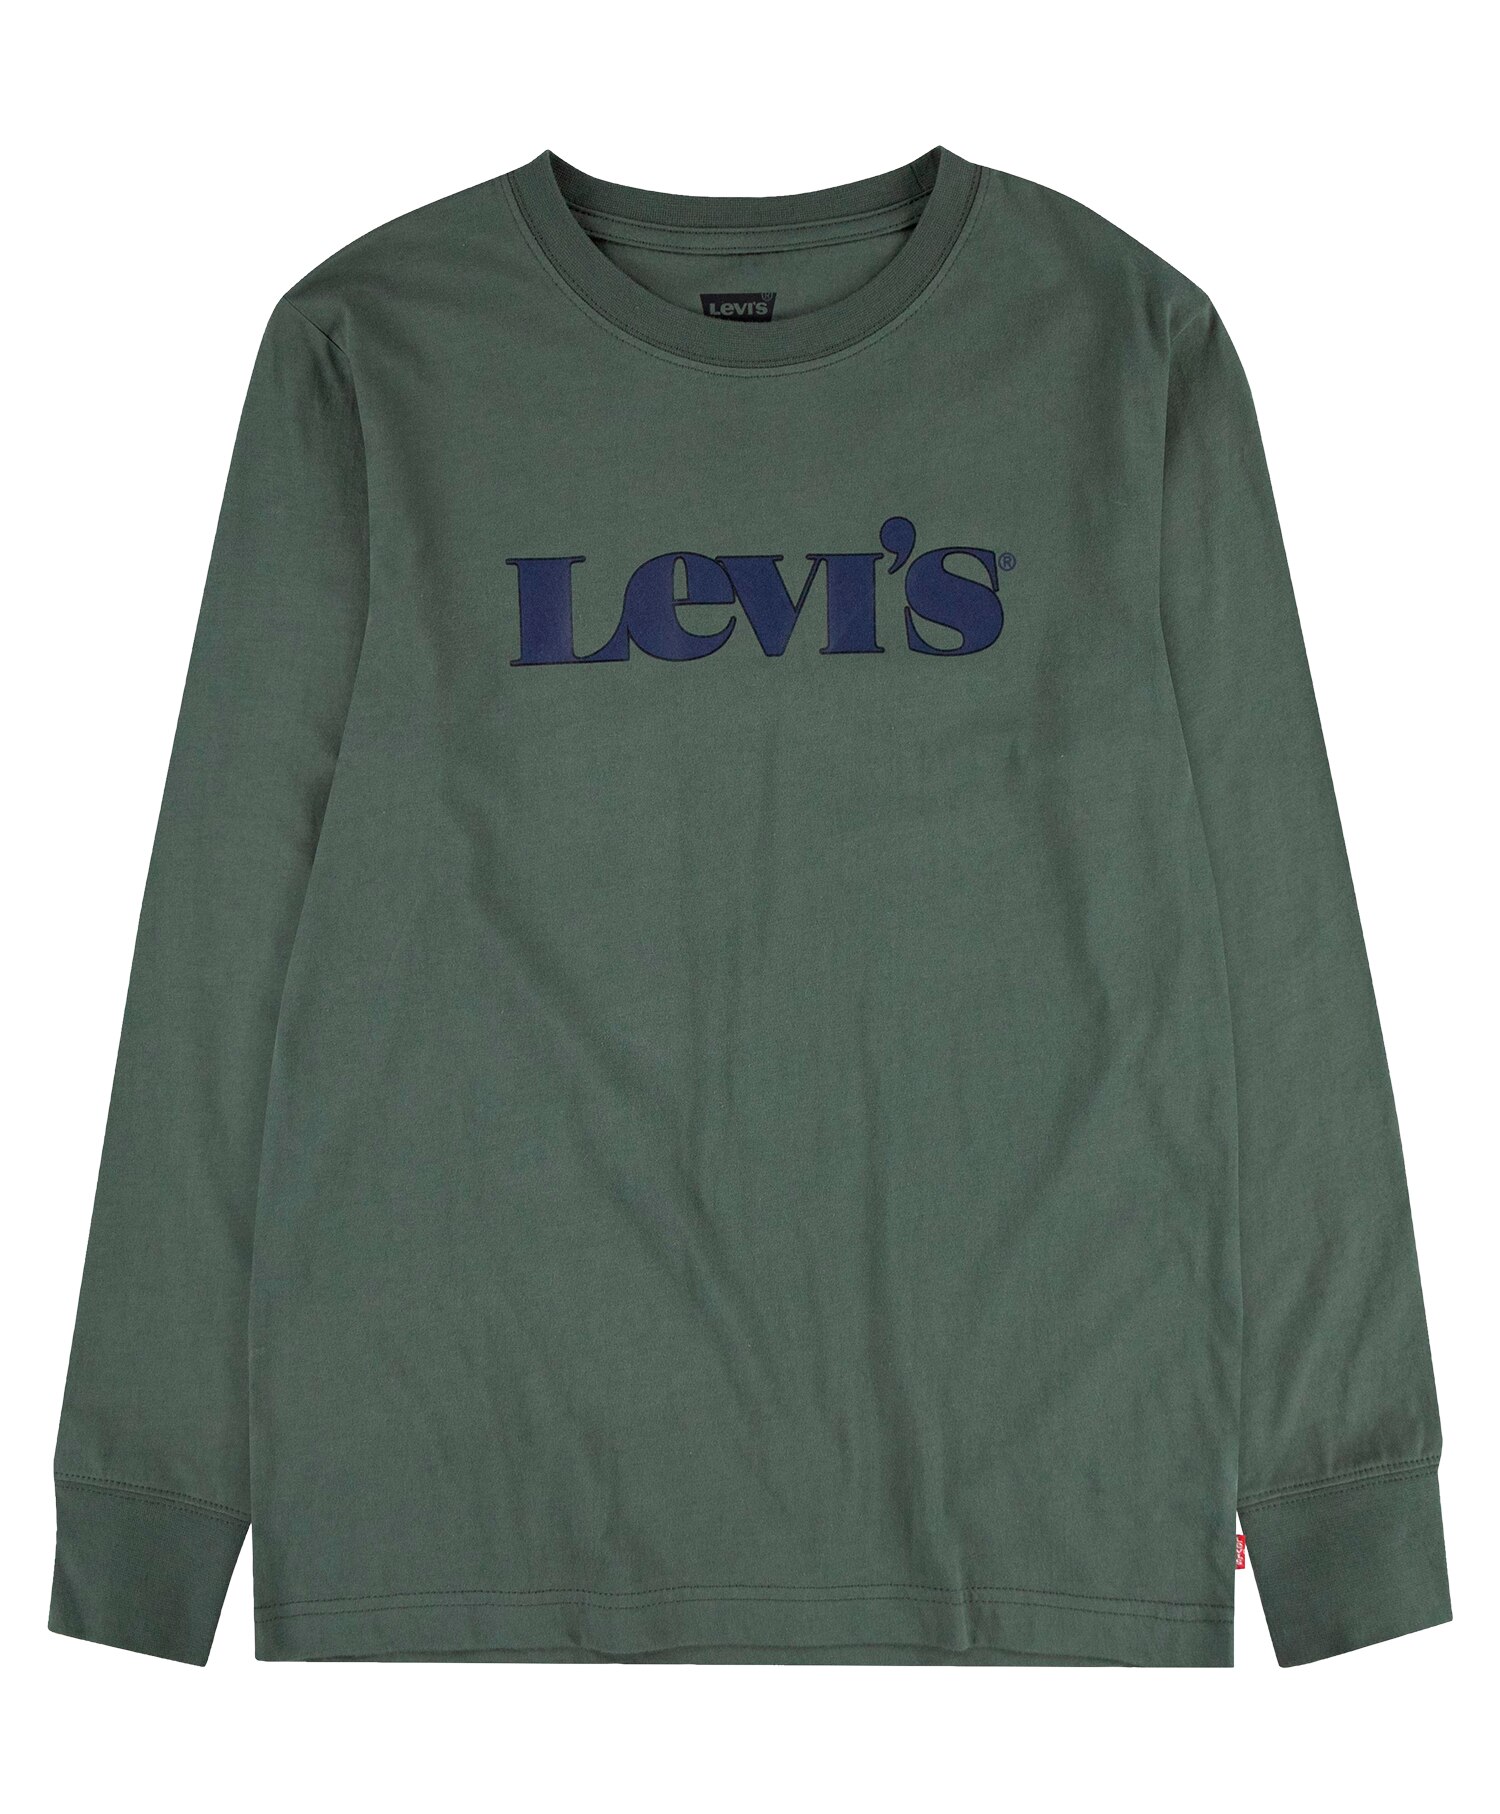 Levi's Longsleeve Graphic Tee